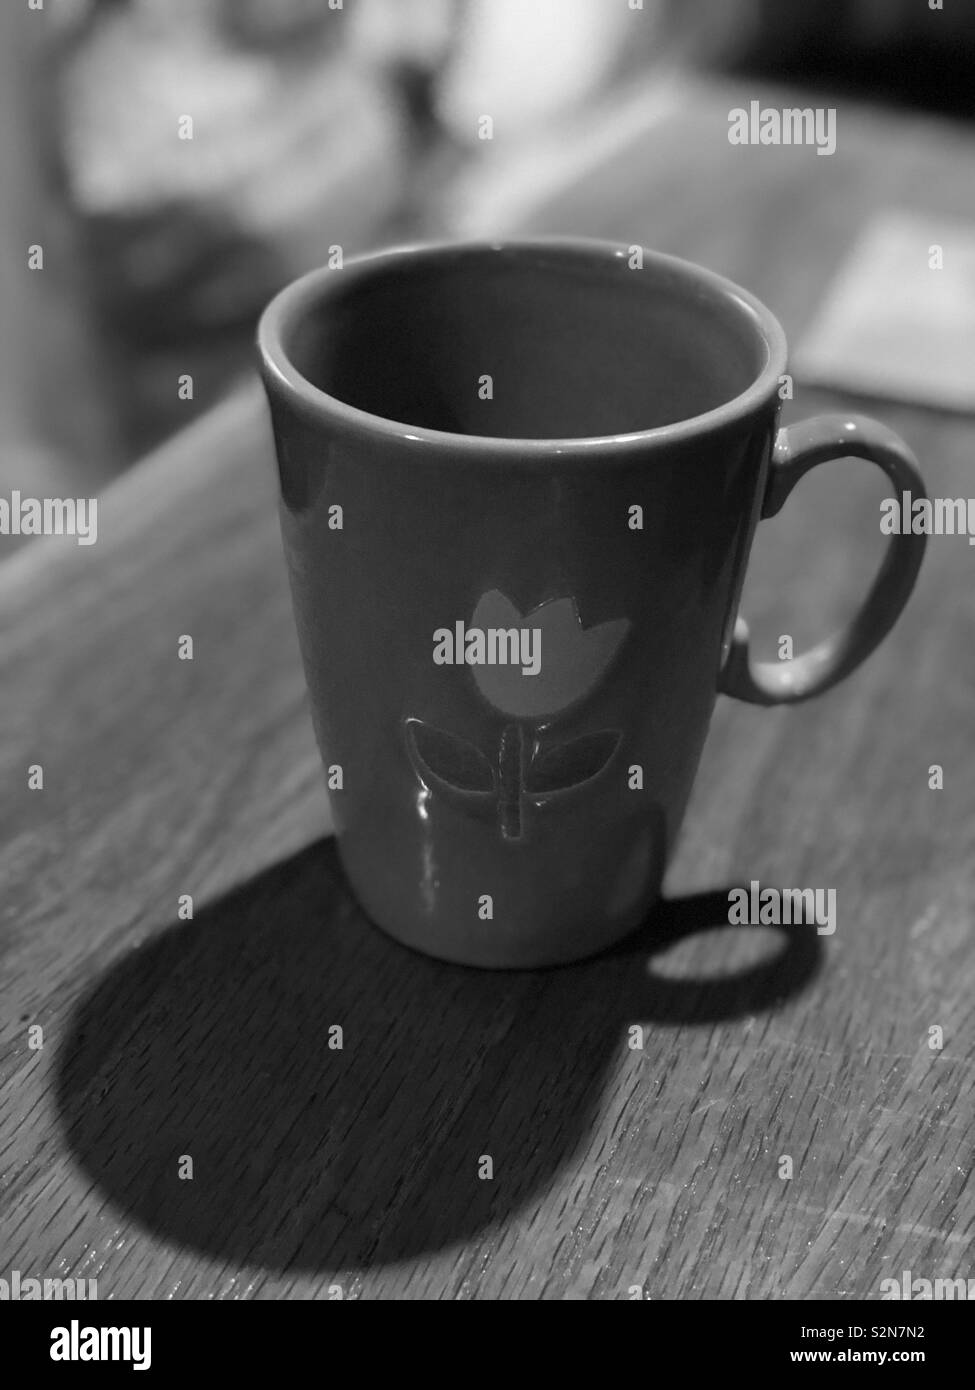 Taza con sombra fotografías e imágenes de alta resolución - Alamy